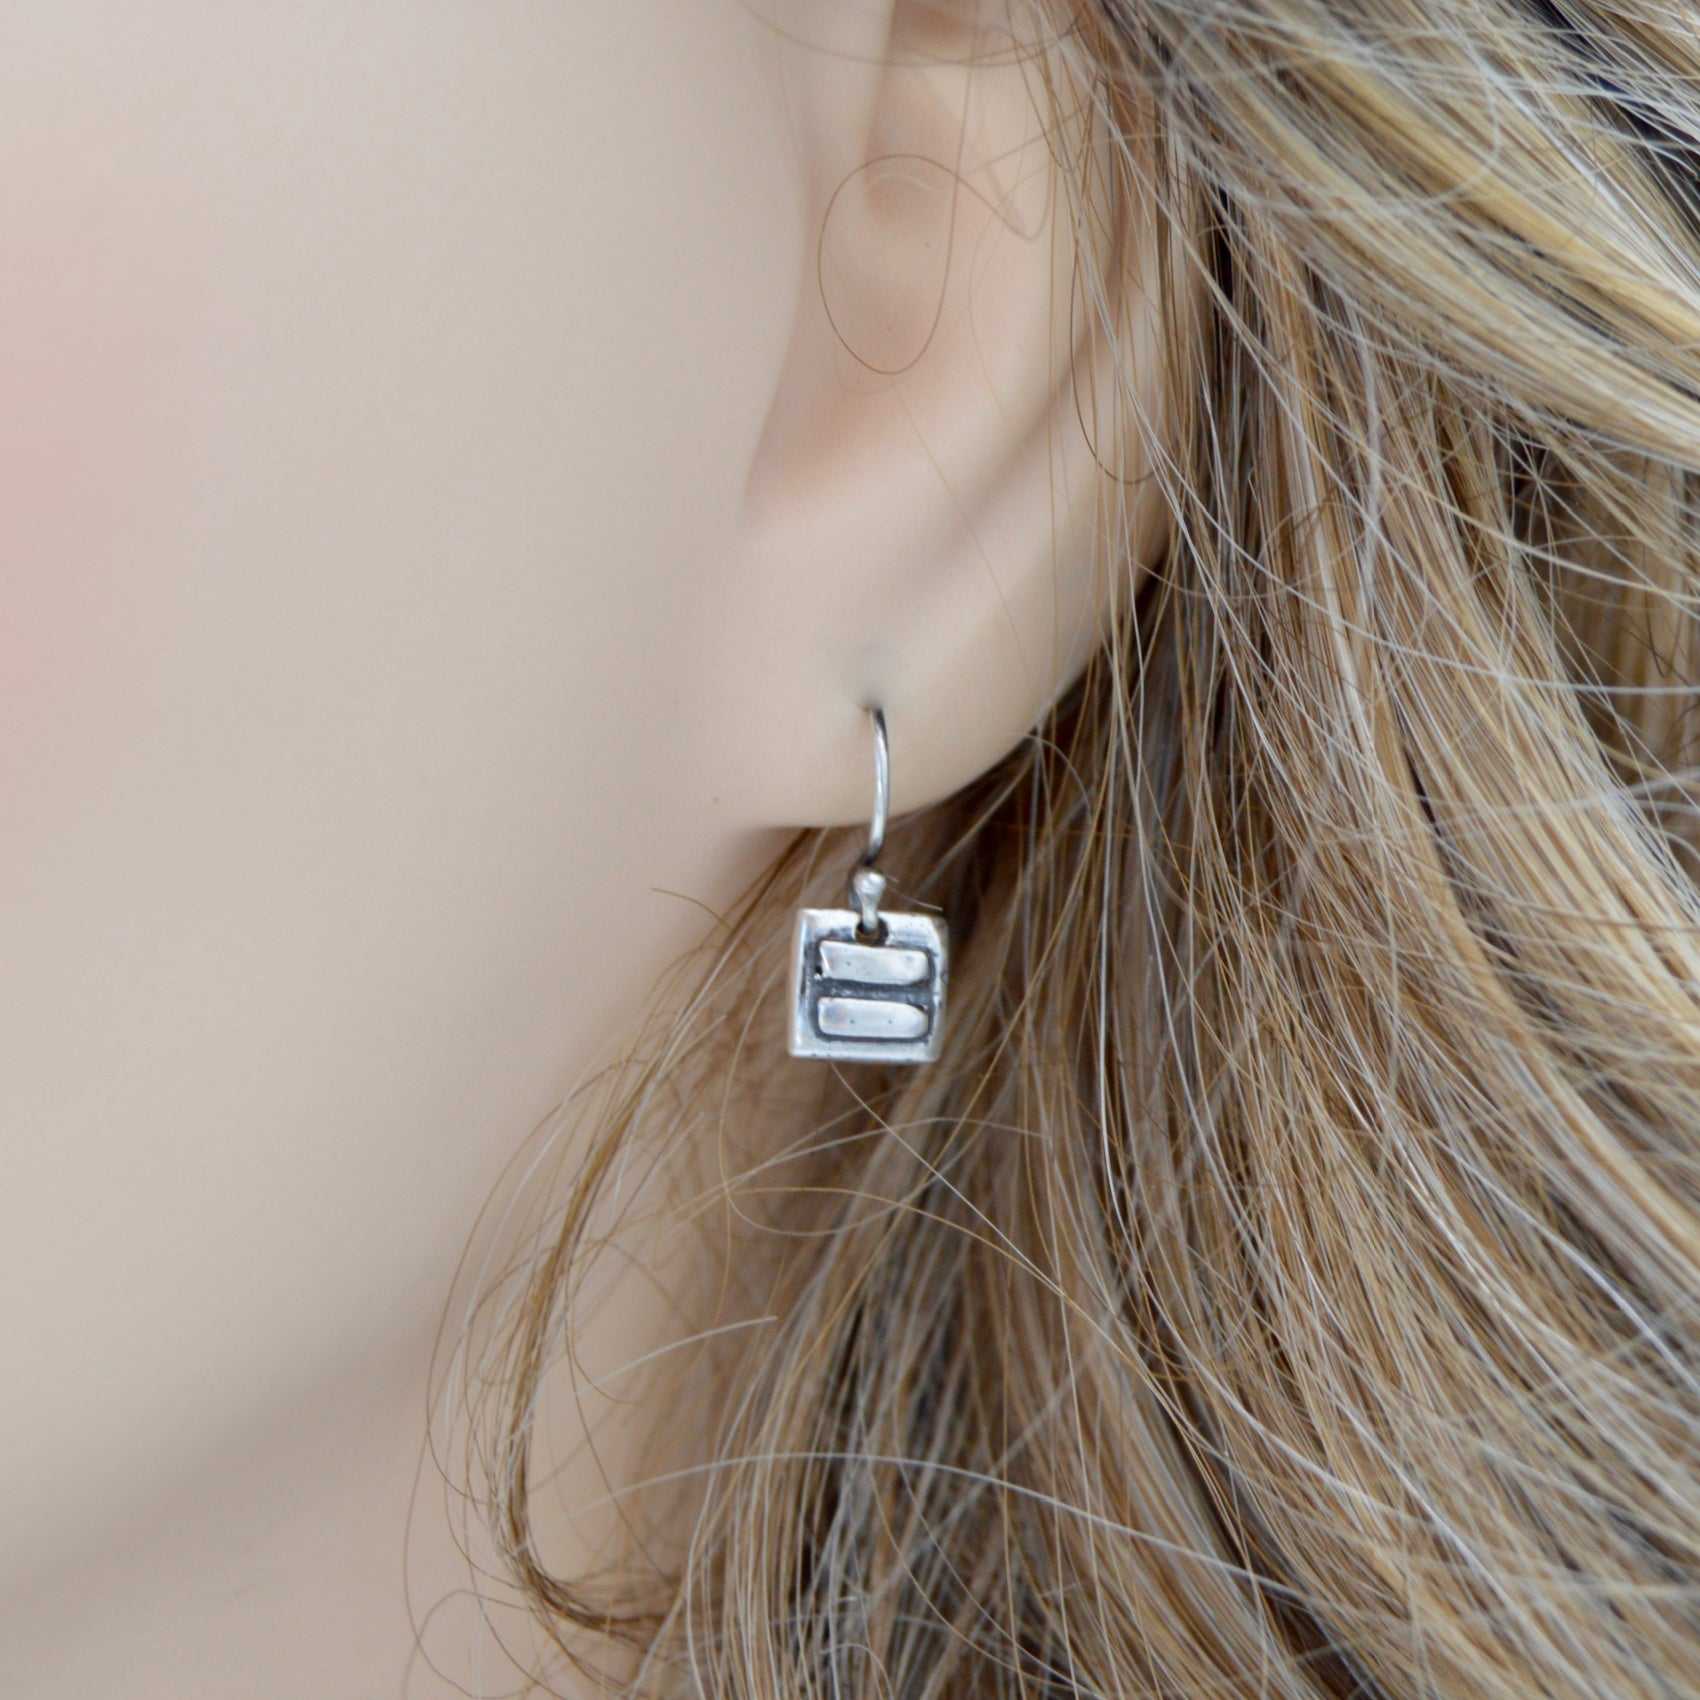 PRIDE equality symbol earrings